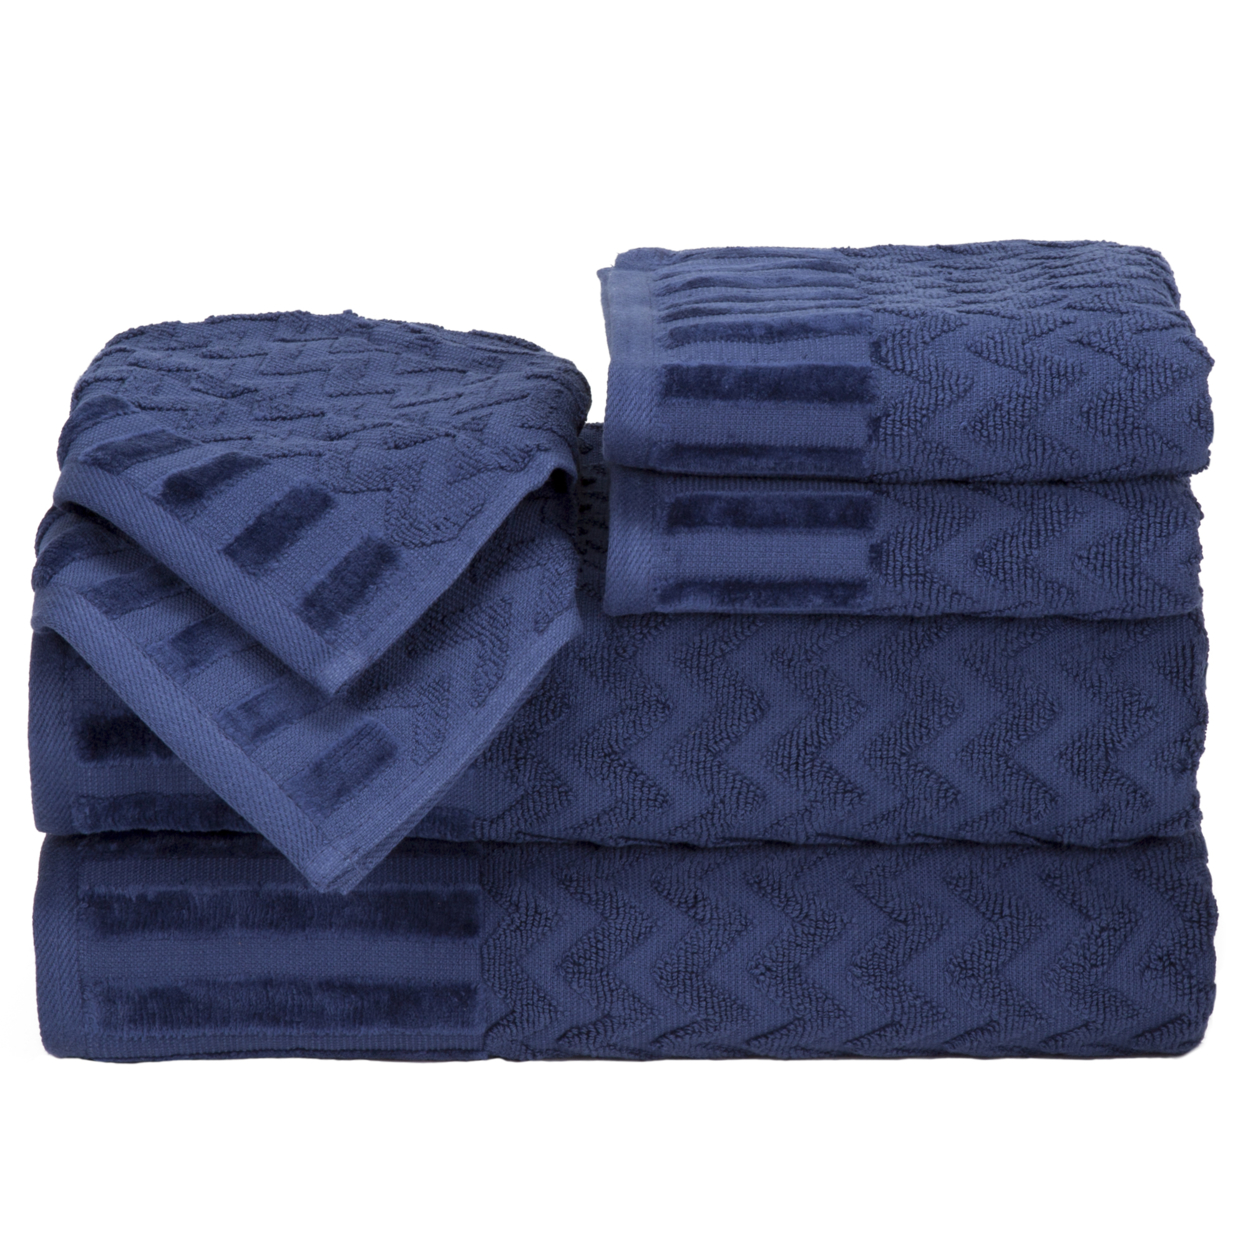 Lavish Home Chevron 100% Cotton 6 Piece Towel Set - Navy